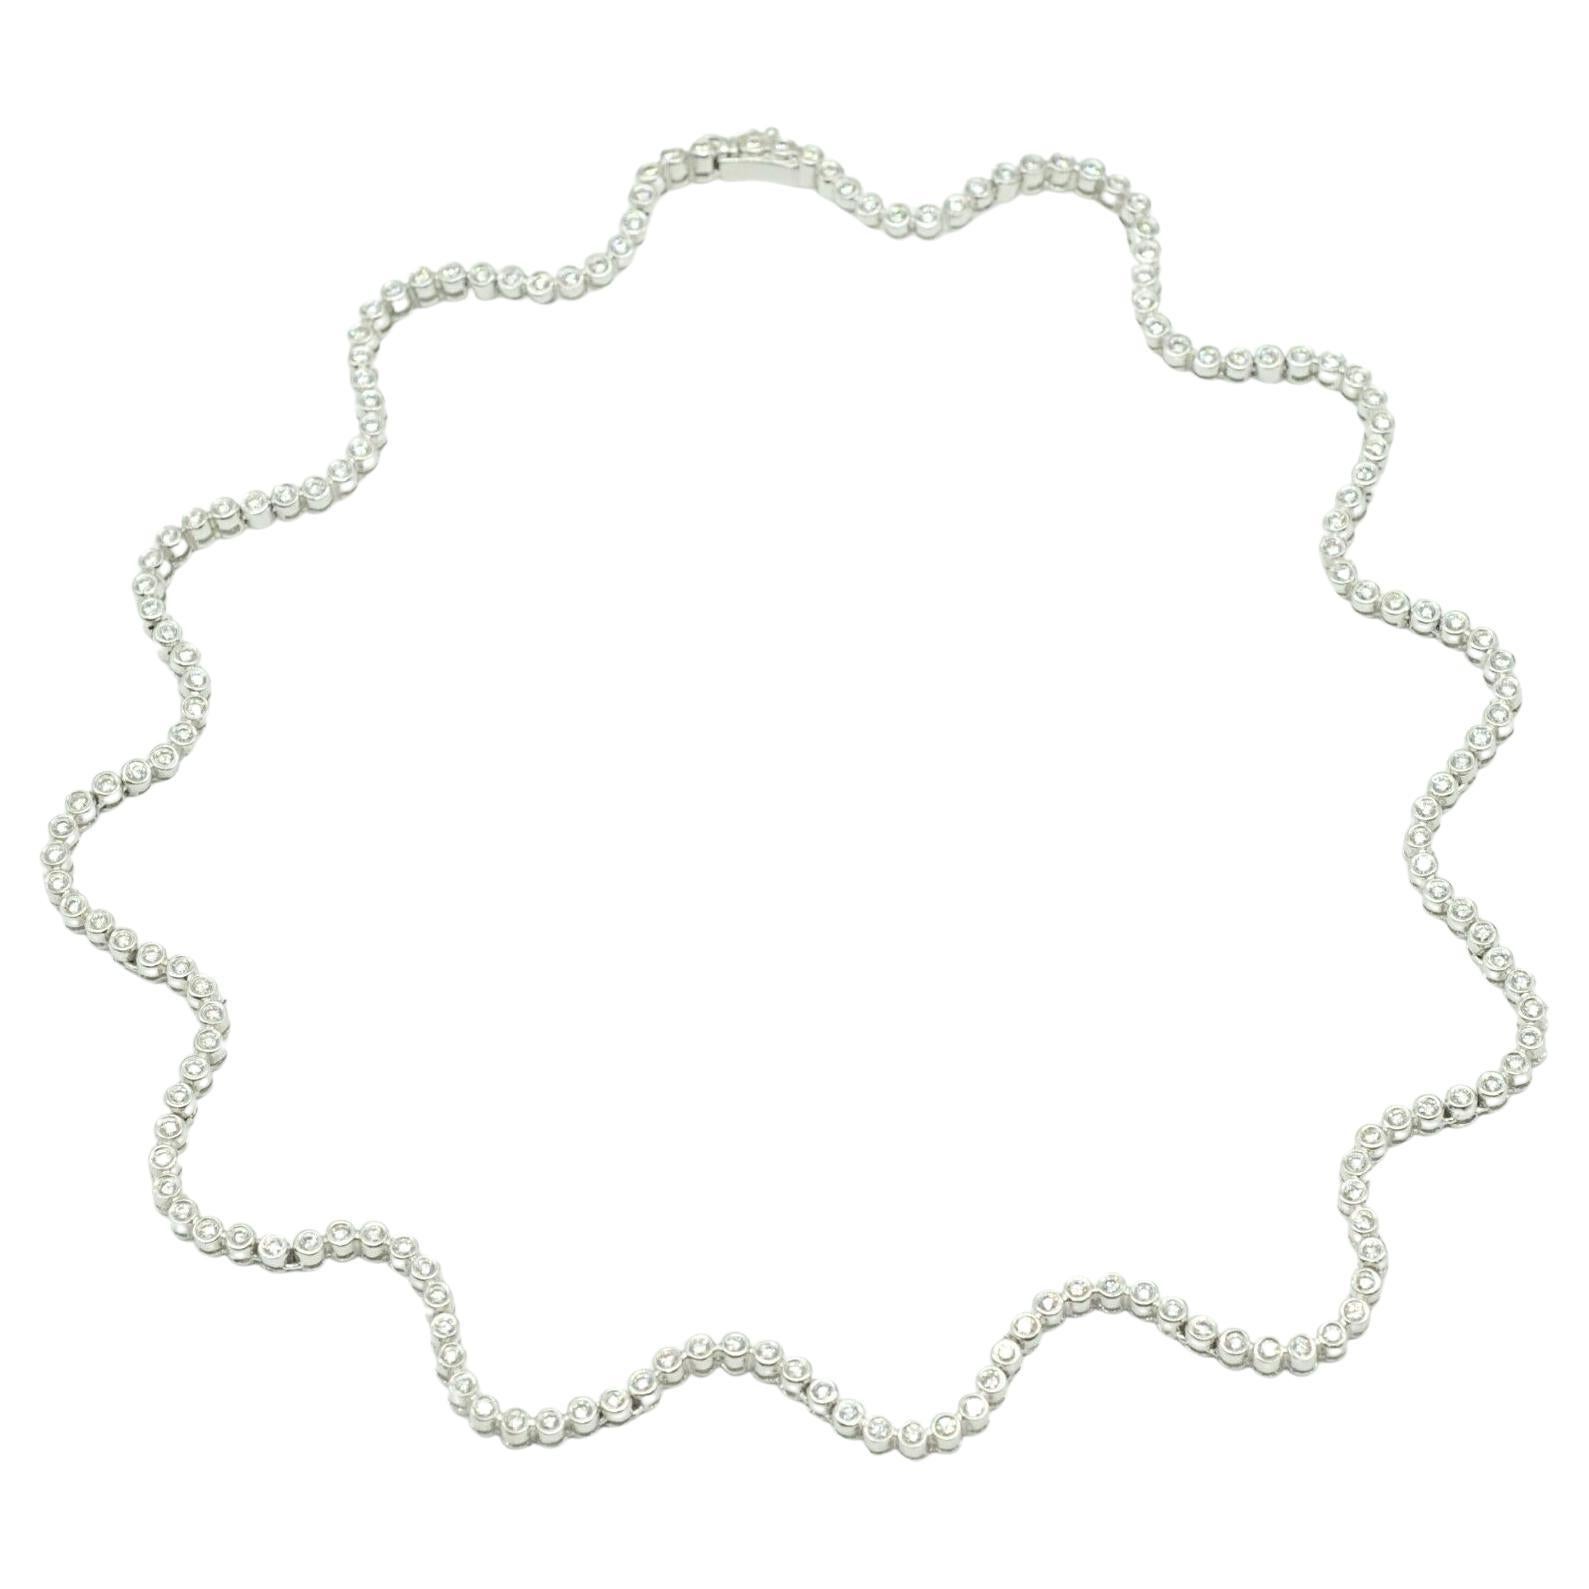 5 Carat Diamond S-Wave Bezel Set "Tennis Necklace" in 18K White Gold